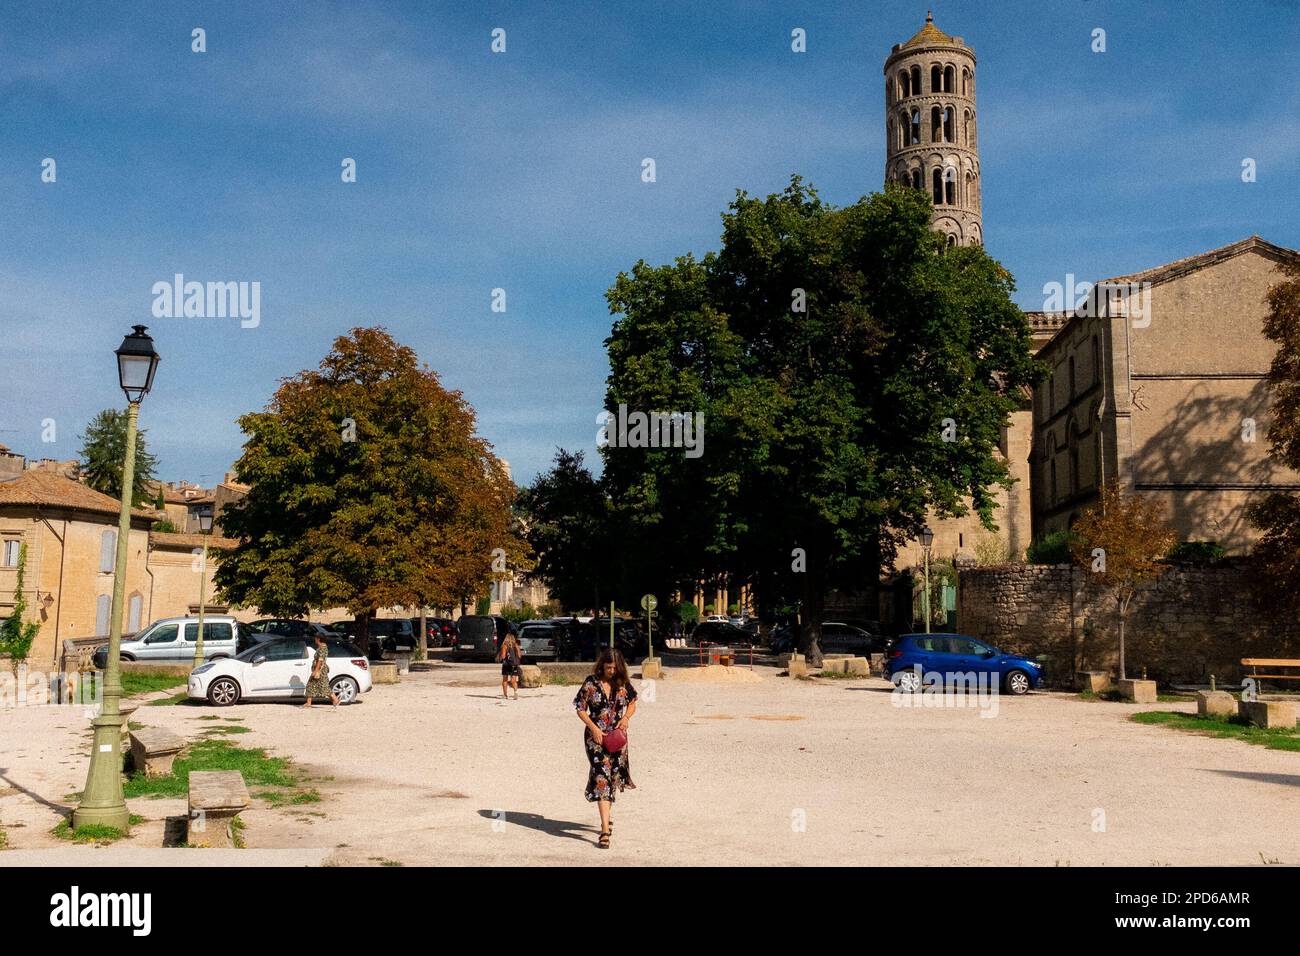 La città francese di Uzès - Uzès, regione occitanie della Francia meridionale Foto Stock